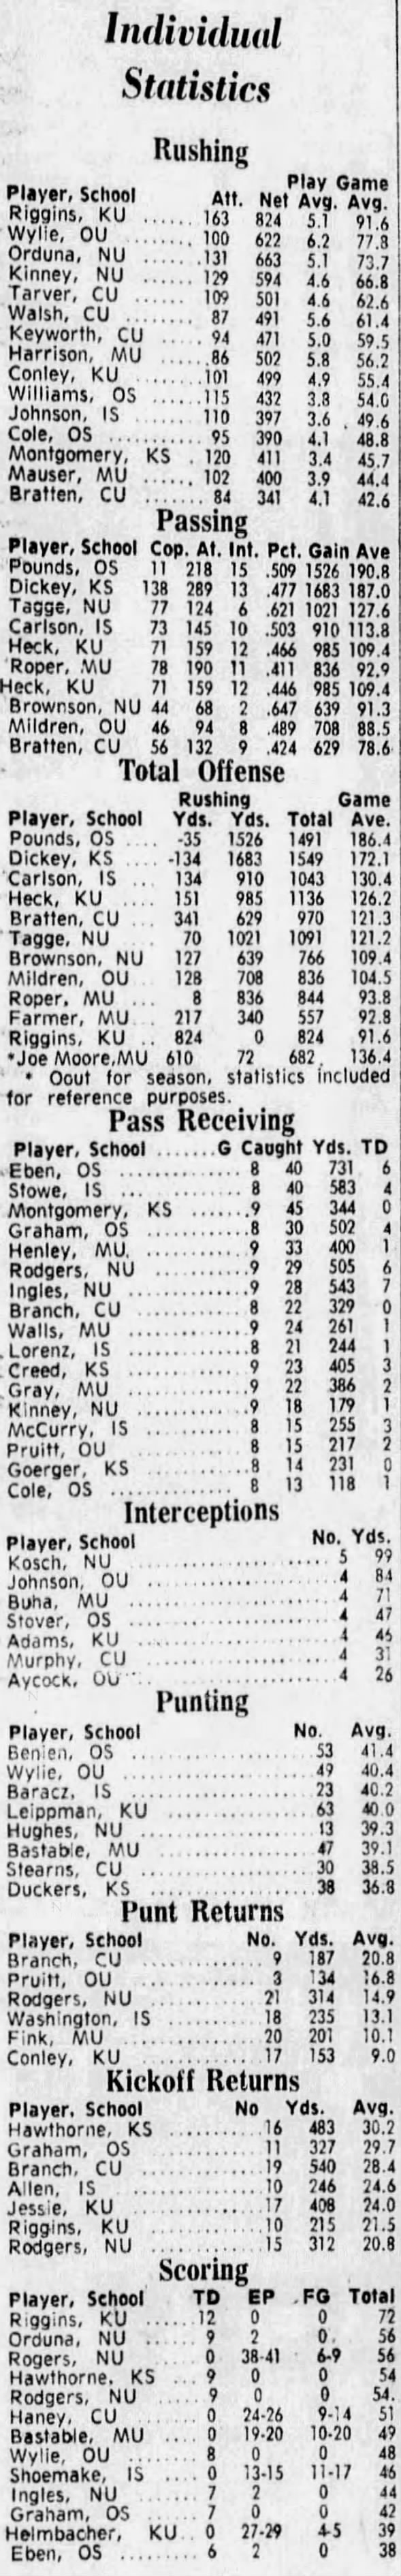 1970 Big Eight 9-game individual stats